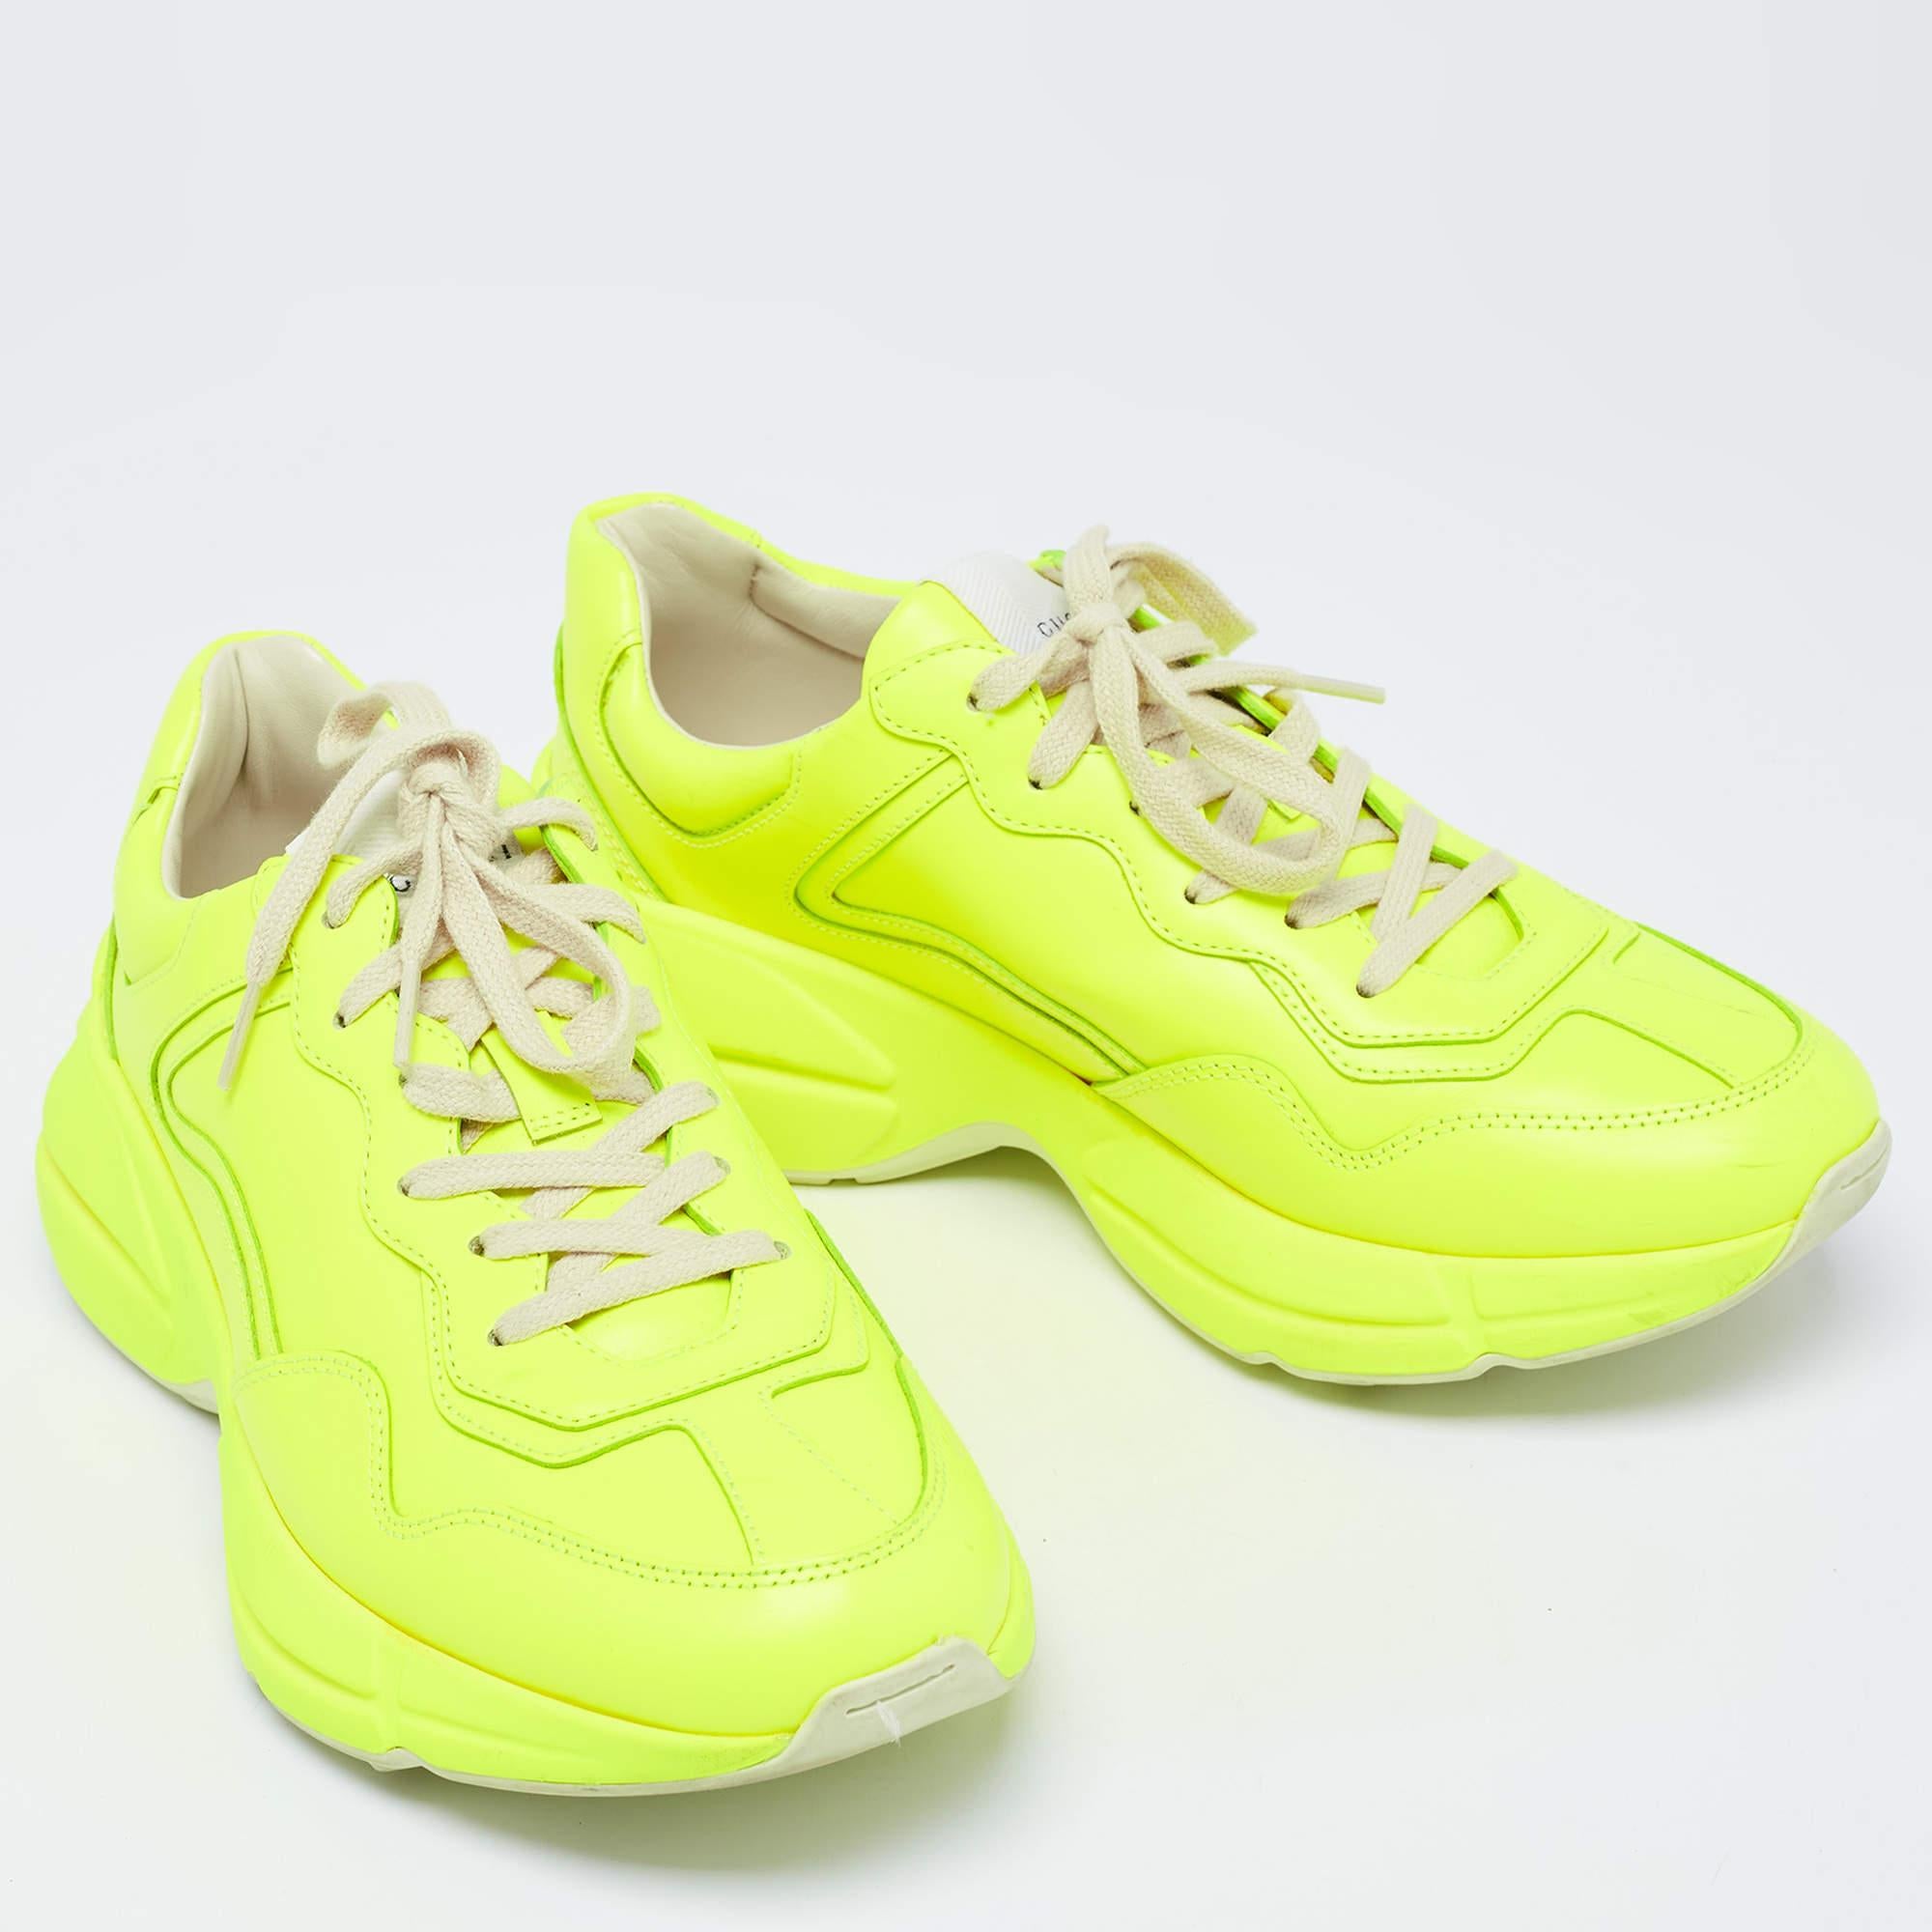 Gucci Neon Yellow Leather Rhyton Sneakers Size 39 In Good Condition For Sale In Dubai, Al Qouz 2